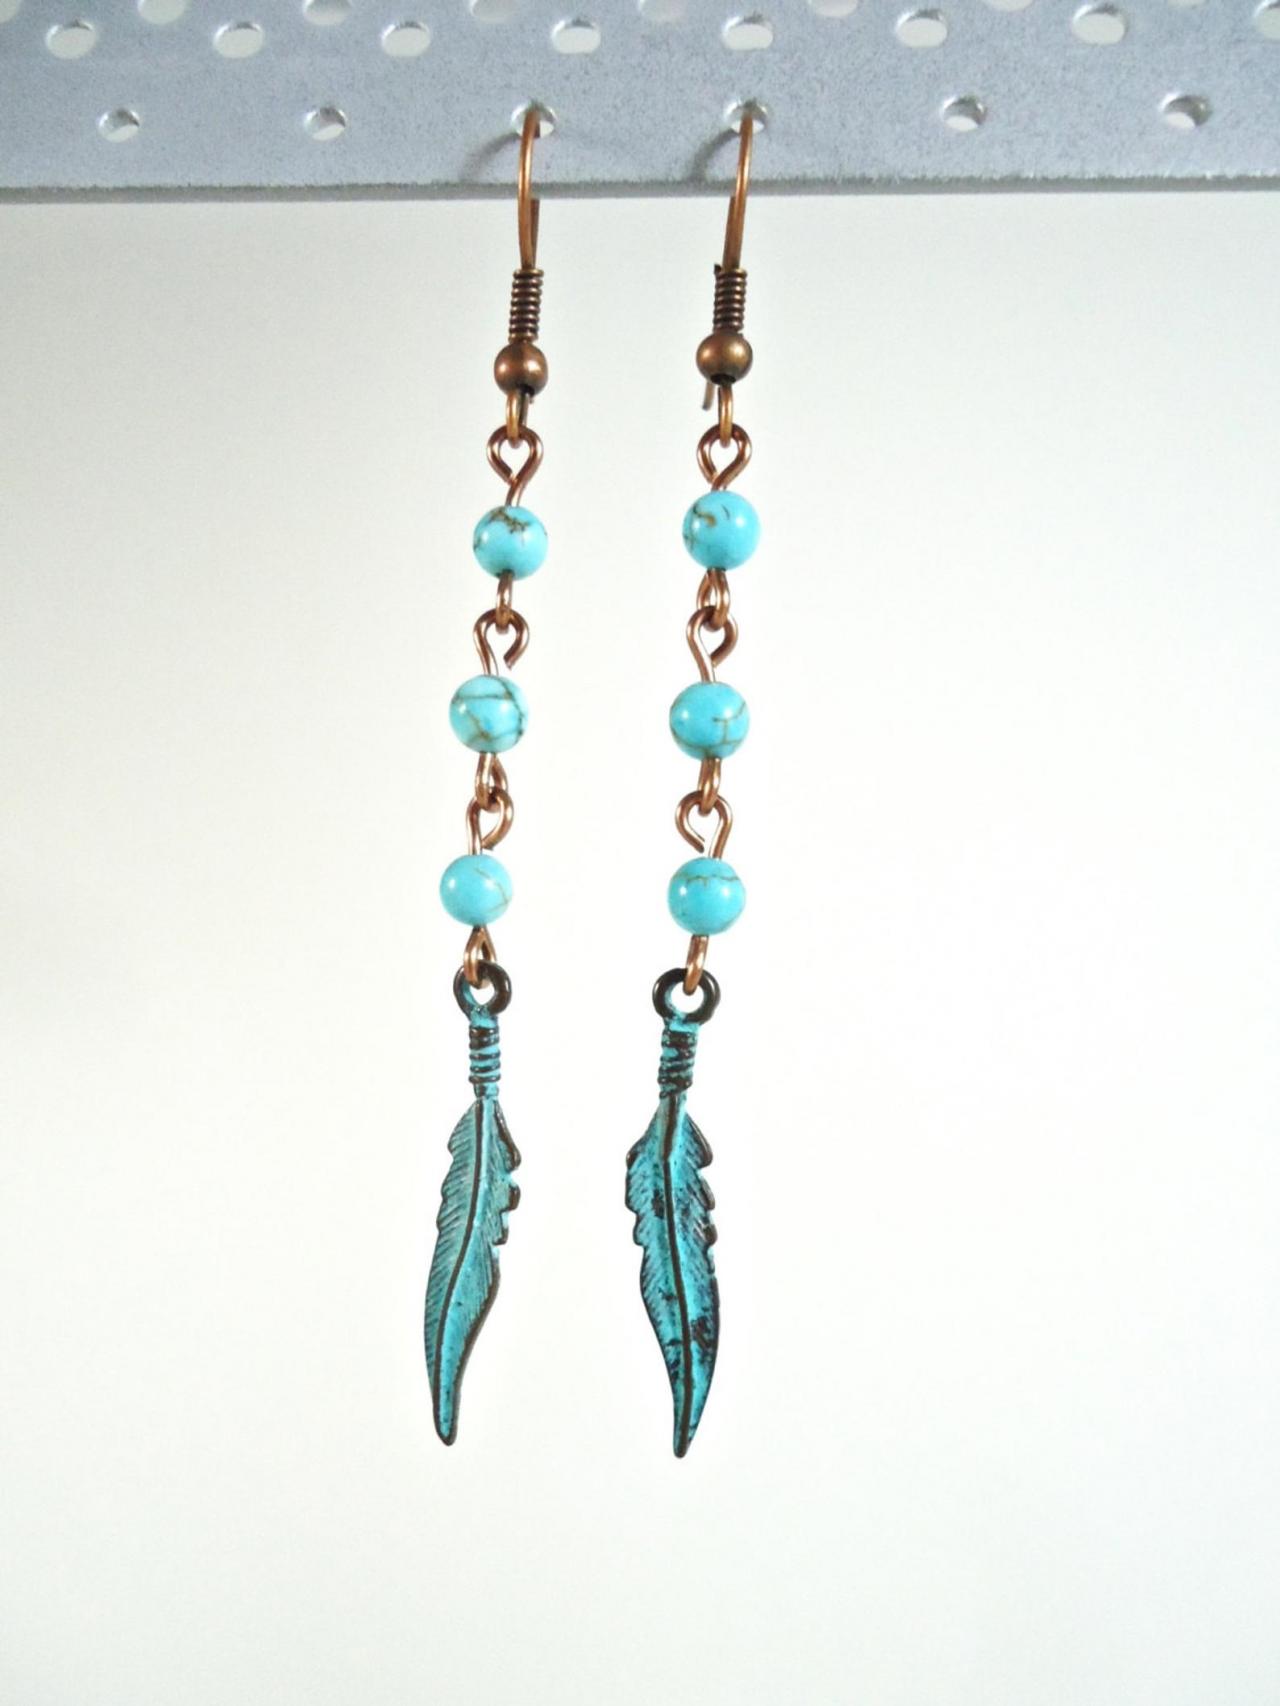 Boho Jewelry - Turquoise Jewelry - Boho Earrings - Gypsy Jewelry - Turquoise Earrings - Feather Earrings - Gypsy Earrings - Feather Jewelry